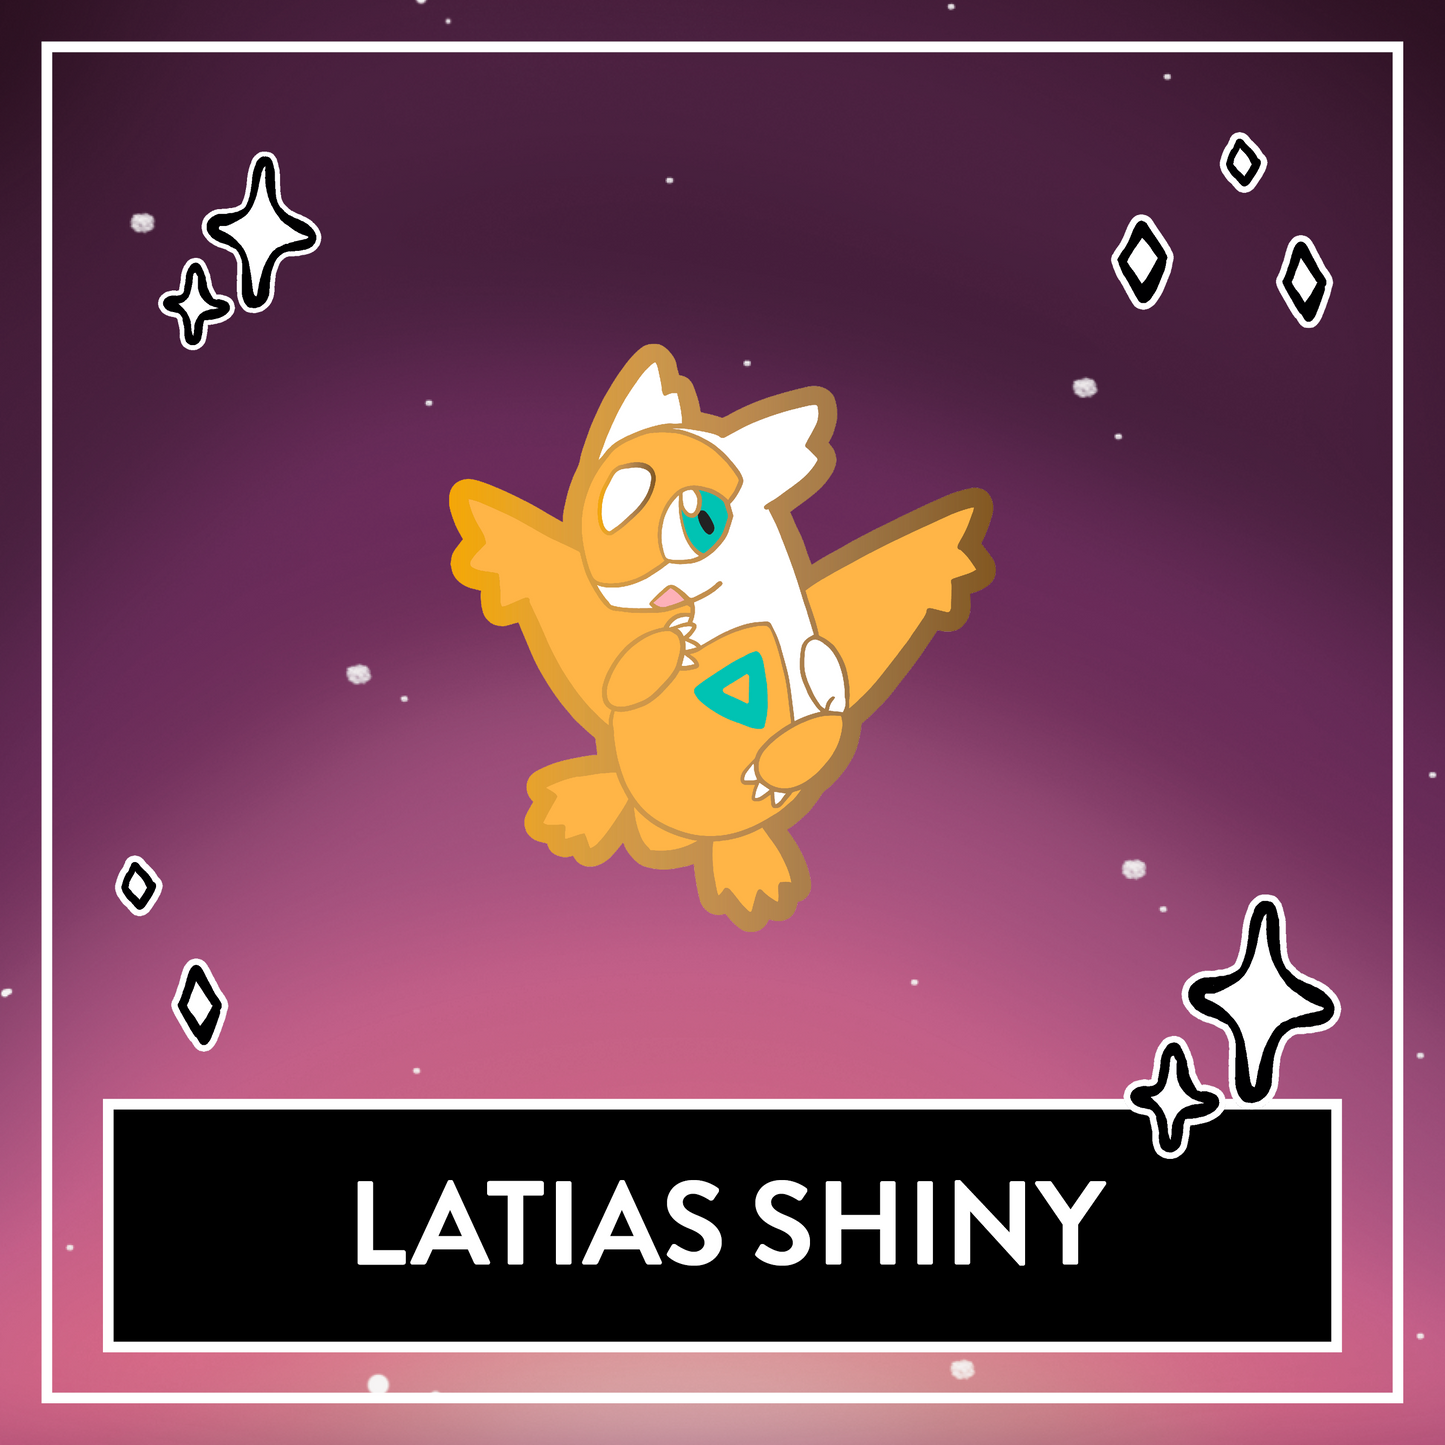 Latios & Latias Mini Pins (Normal & Shiny)